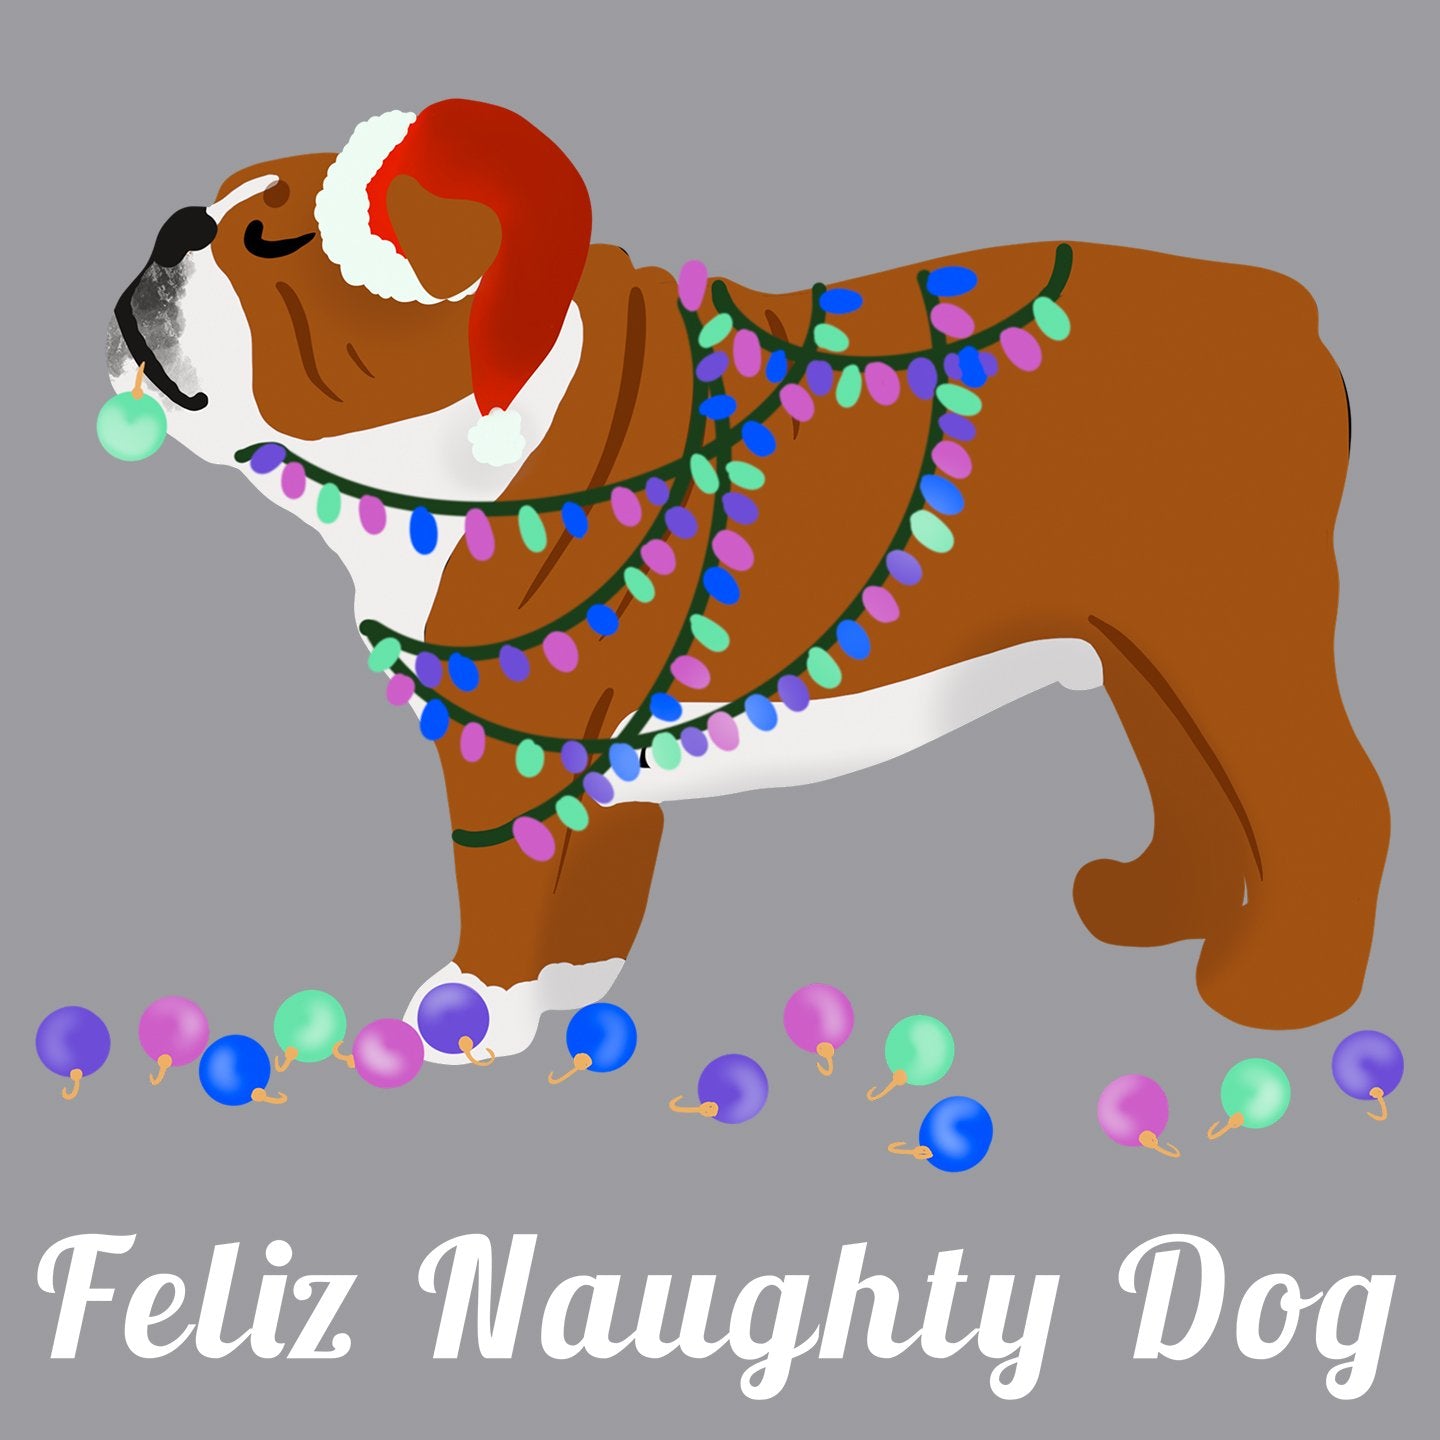 Feliz Naughty Dog Bulldog - Adult Unisex Long Sleeve T-Shirt